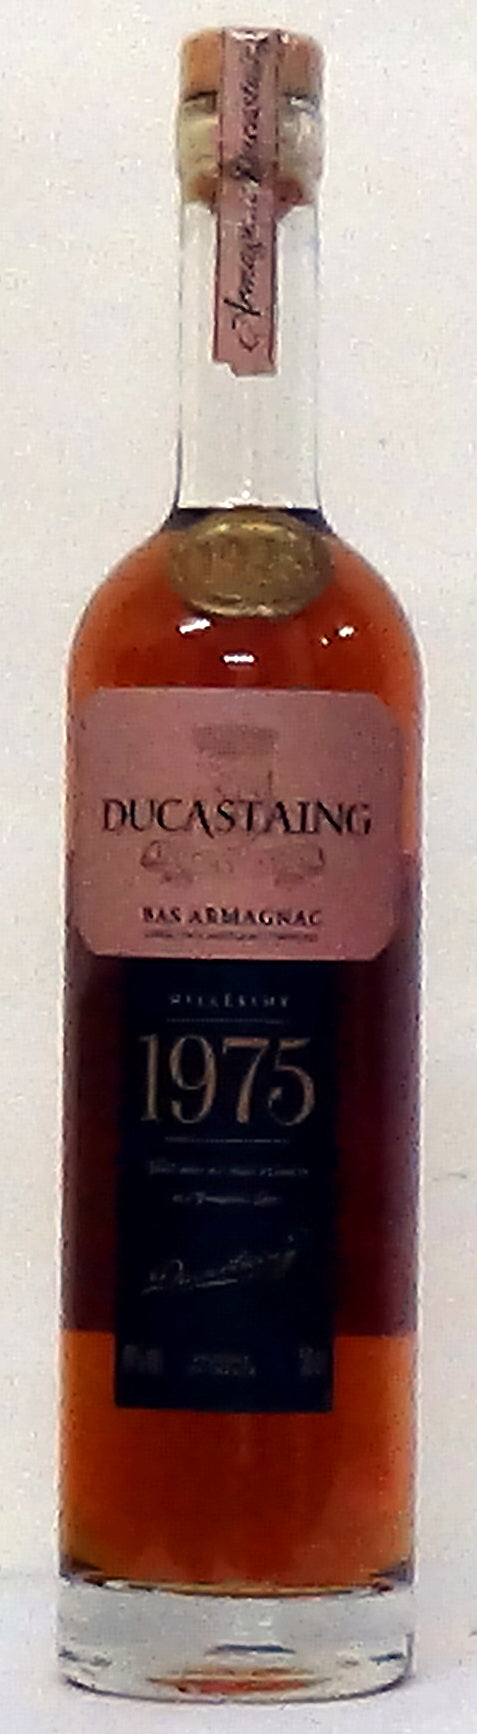 1975 Ducastaing Bas Armagnac Millesime 50cl - Armagnac Spirits - Spiri